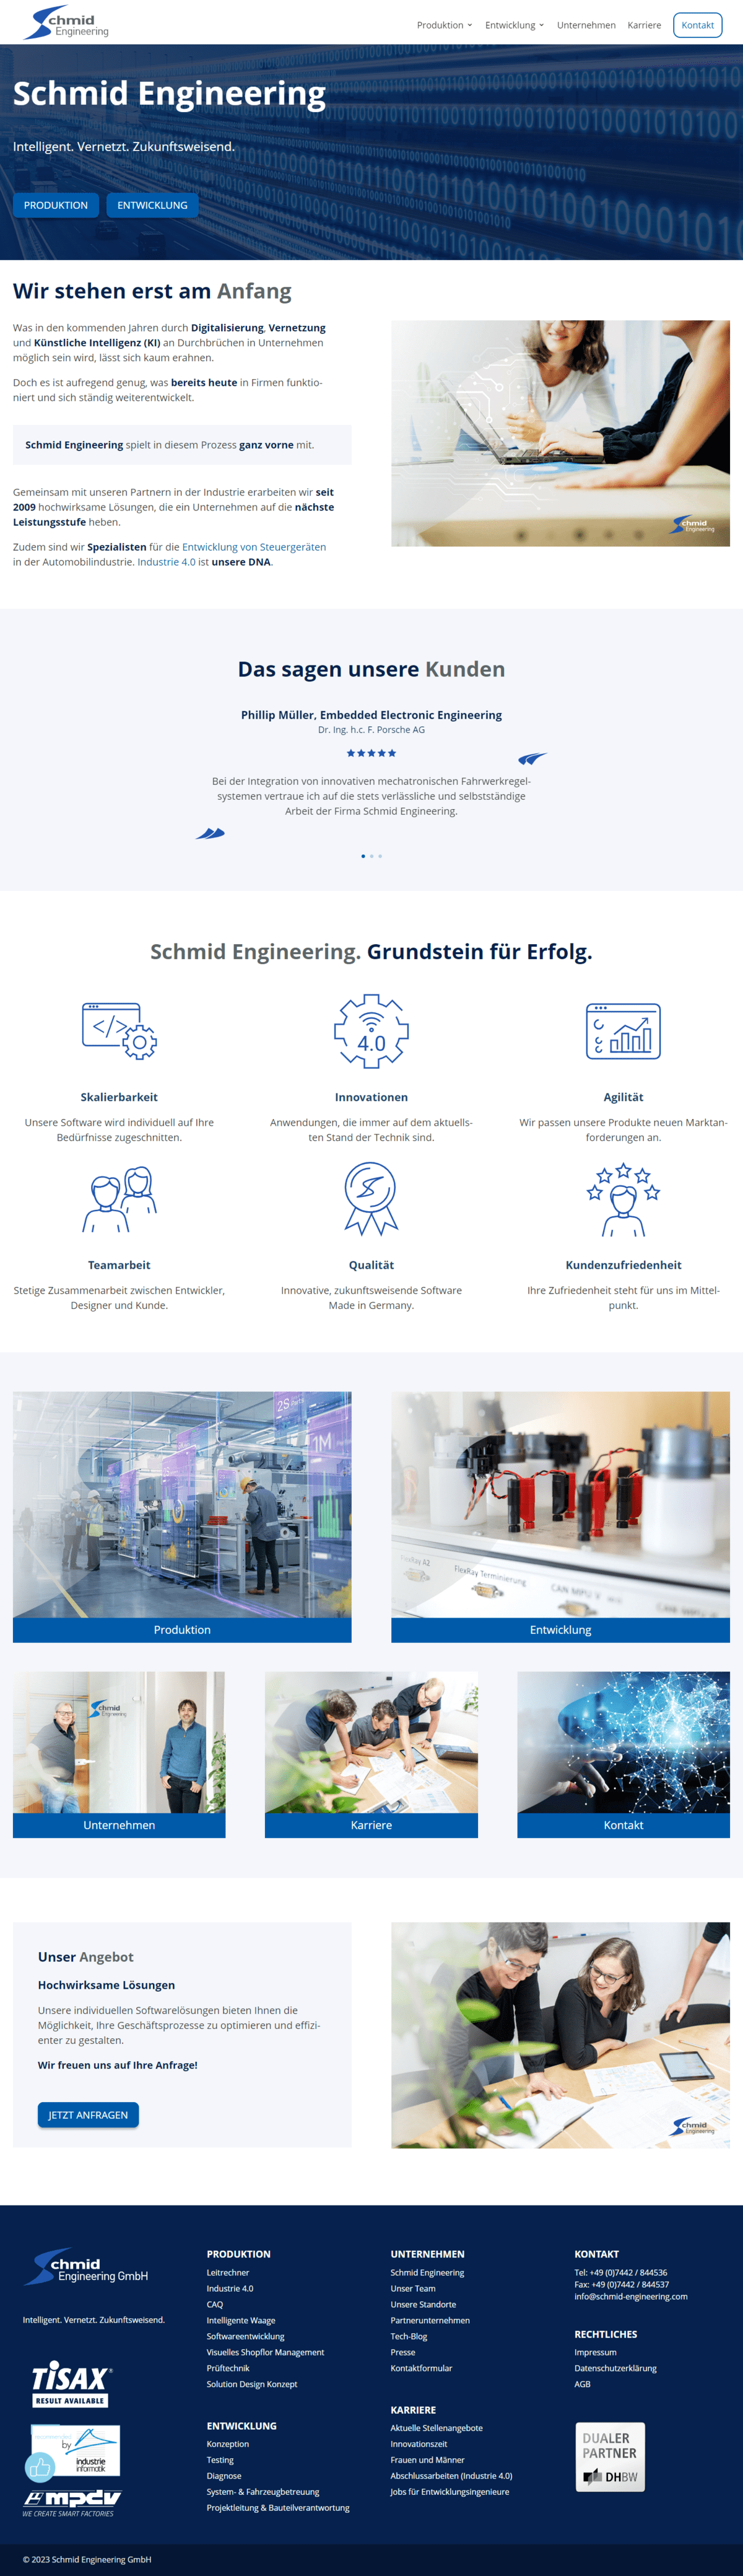 Website der Schmid Engineering GmbH